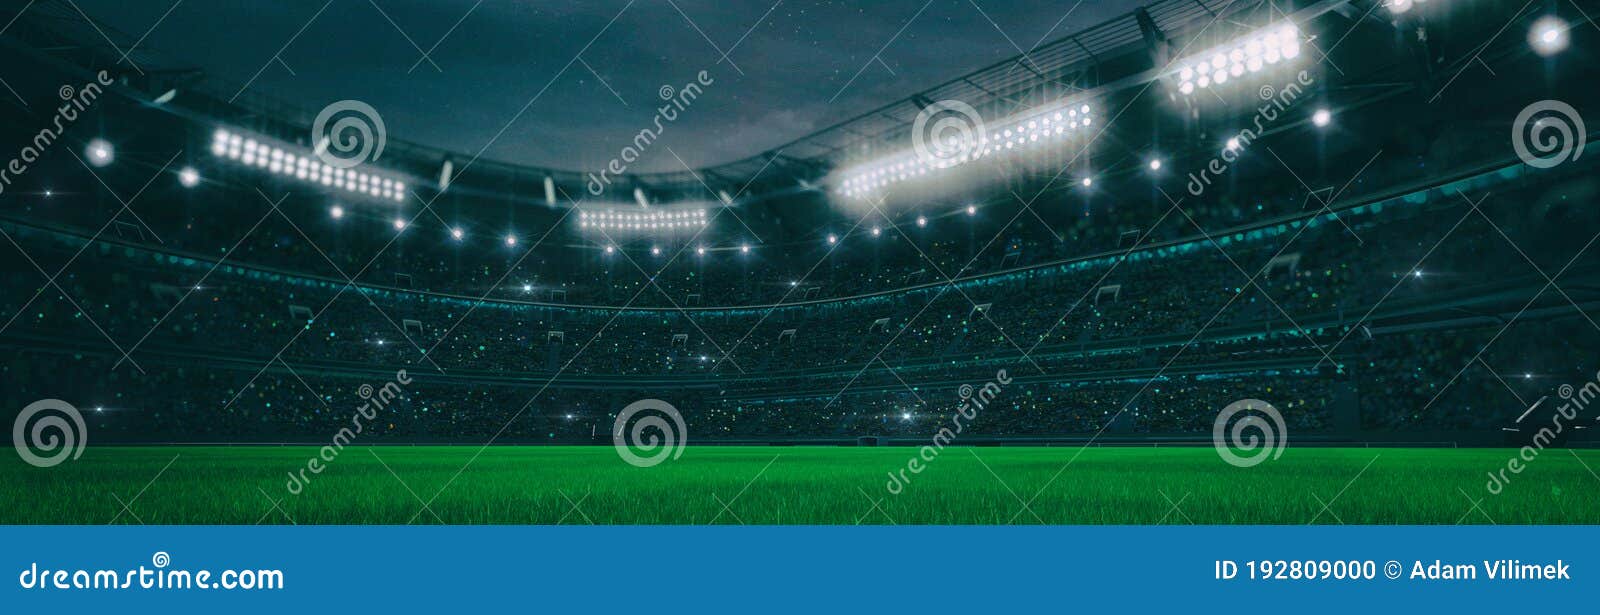 Sport Stadium at Night As Wide Backdrop. Stock Illustration ...